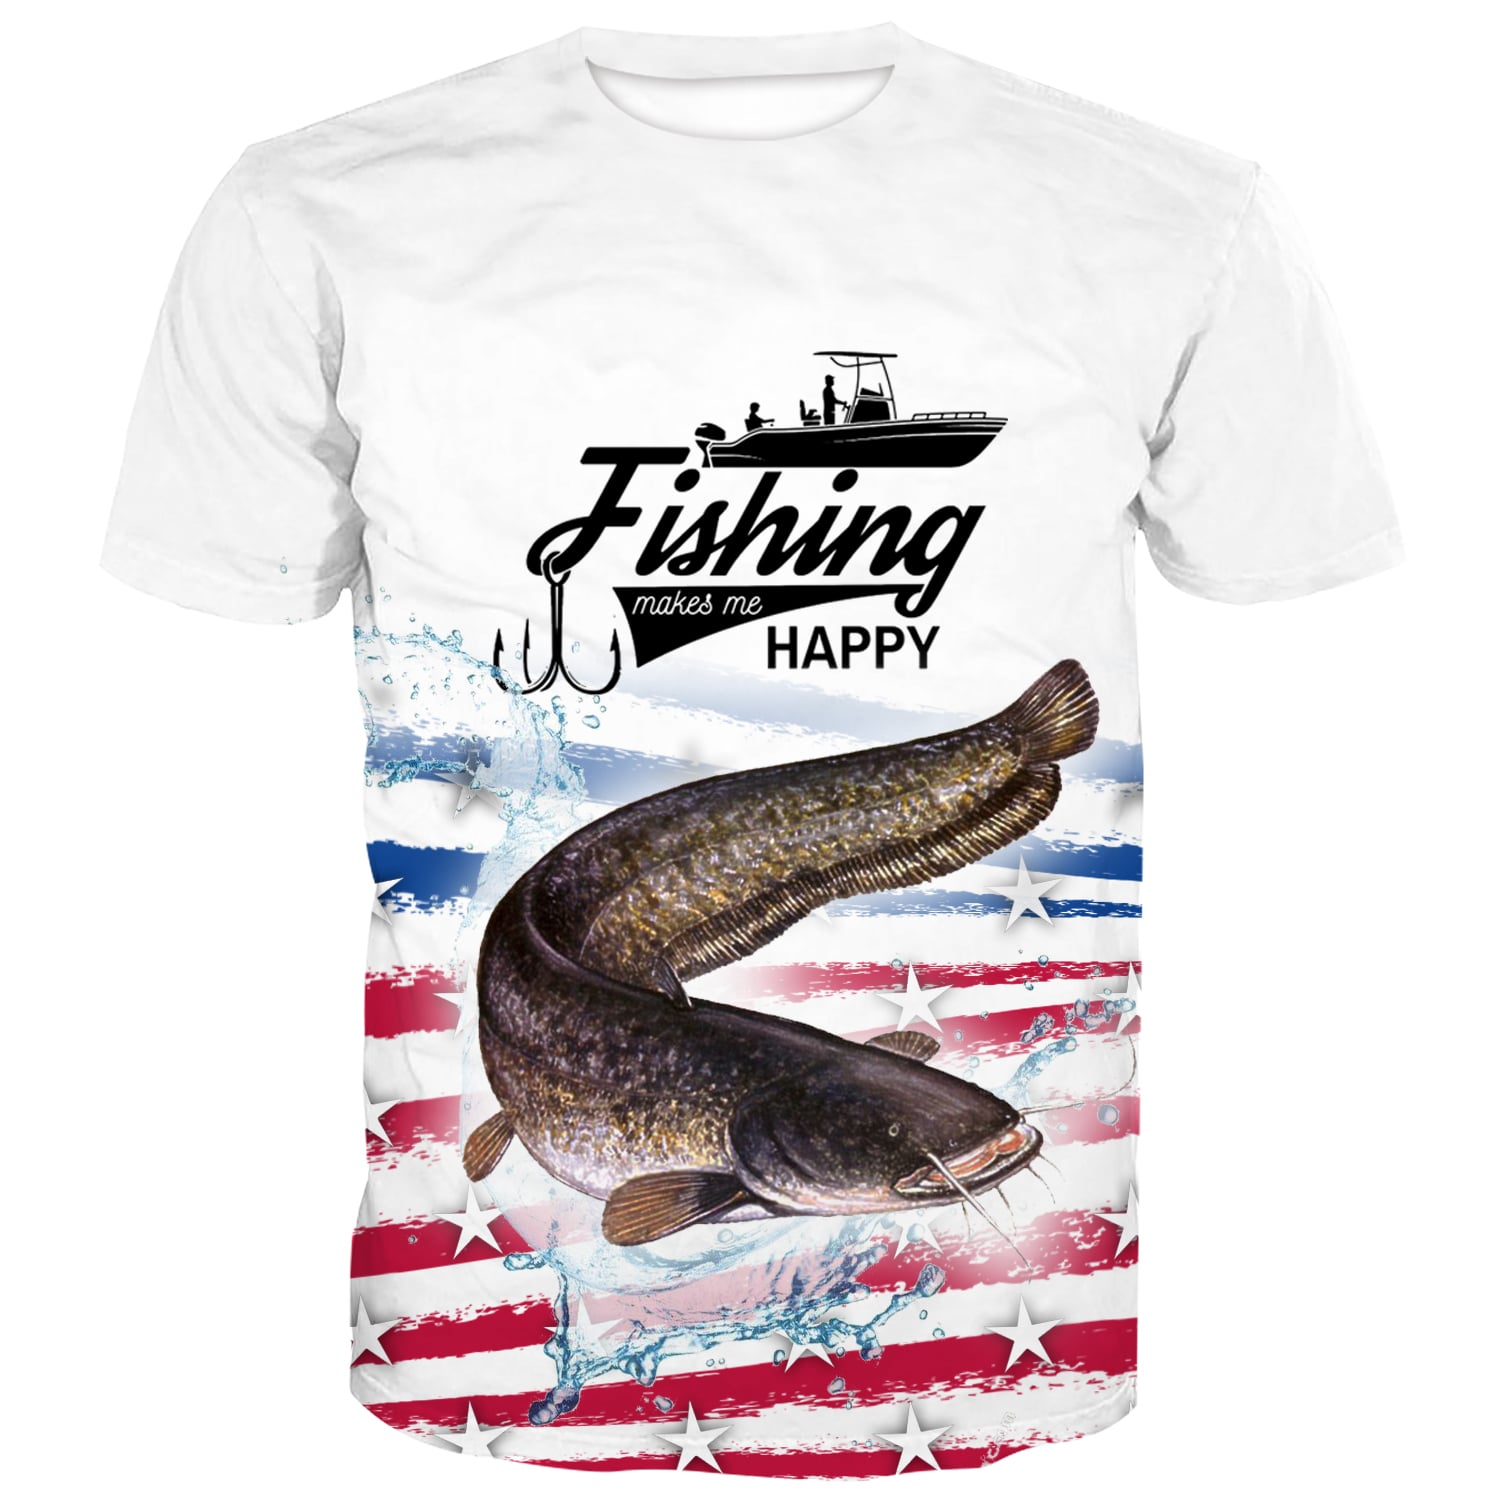 Fishing makes me happy - Catfish T-Shirt